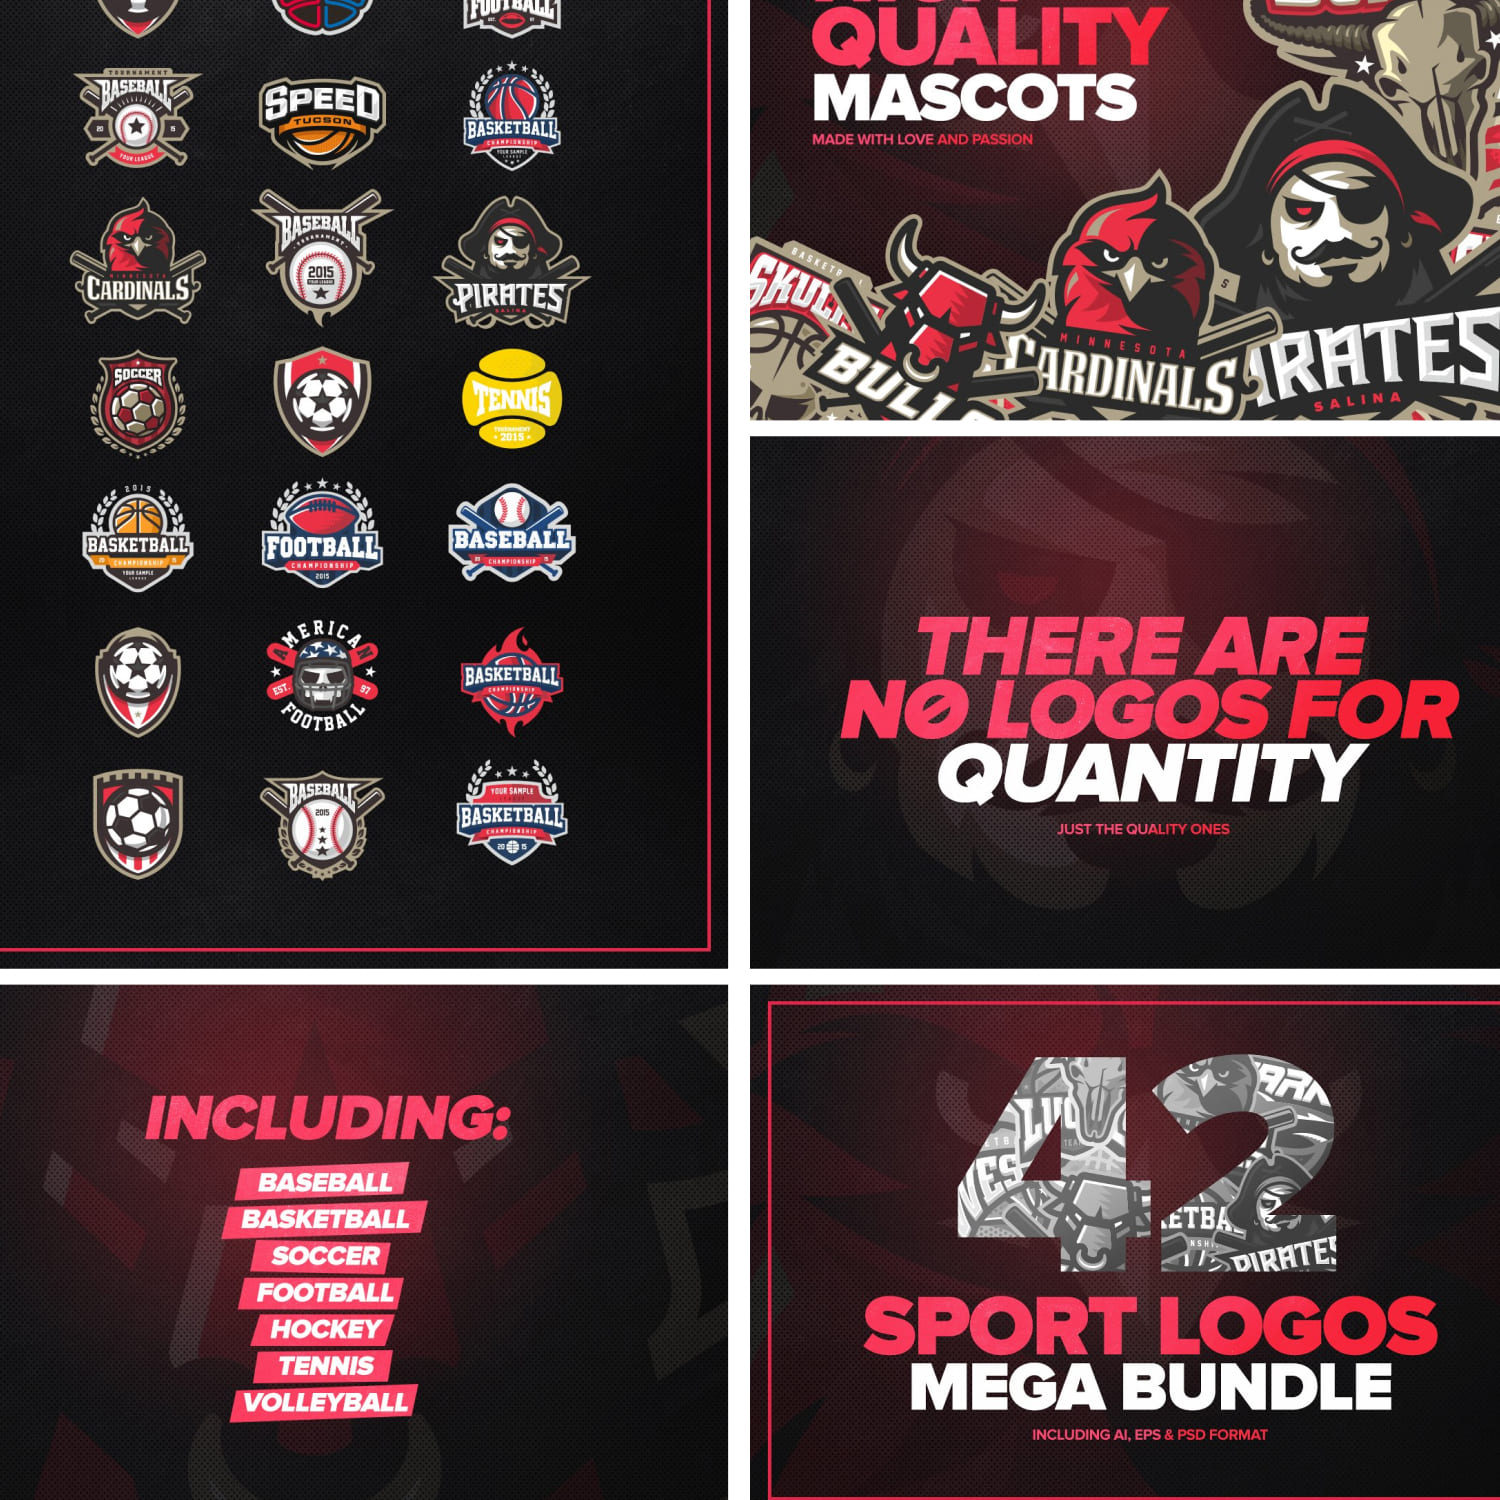 42 Sport logos MEGA BUNDLE cover.